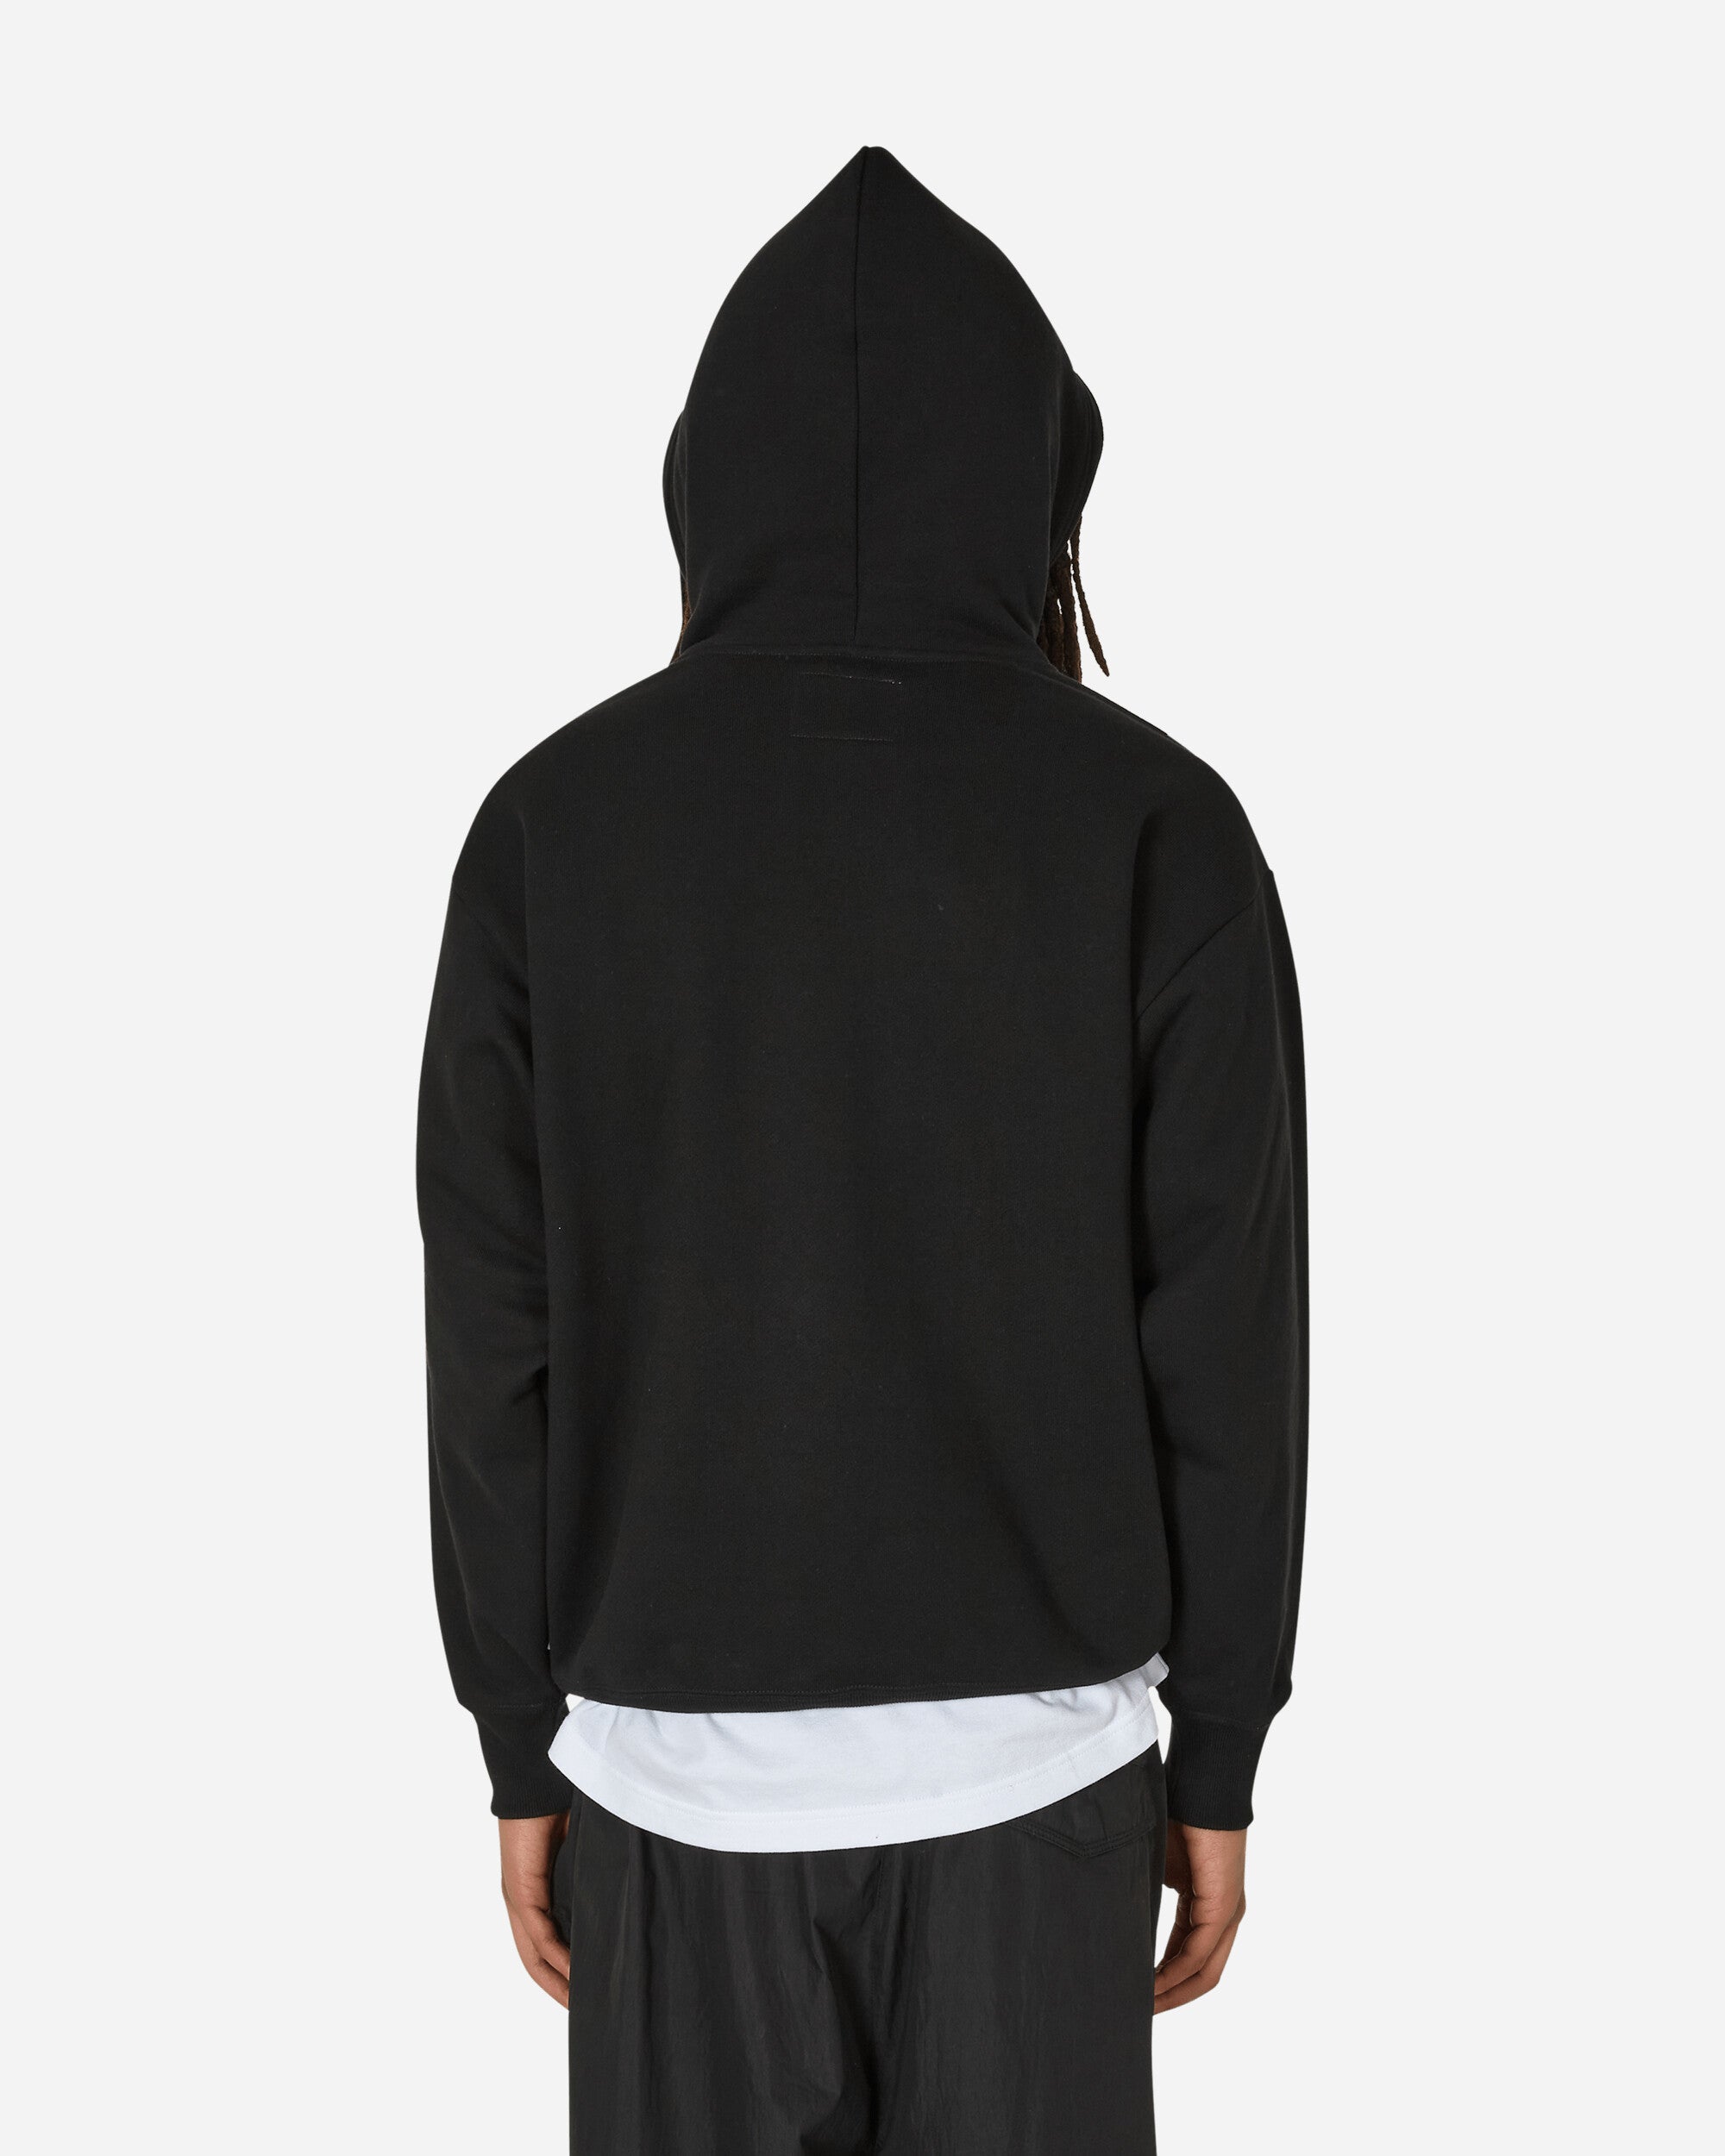 WTAPS Dt Cut & Sewn Black Sweatshirts Hoodies 241ATDT-CSM04 BLK